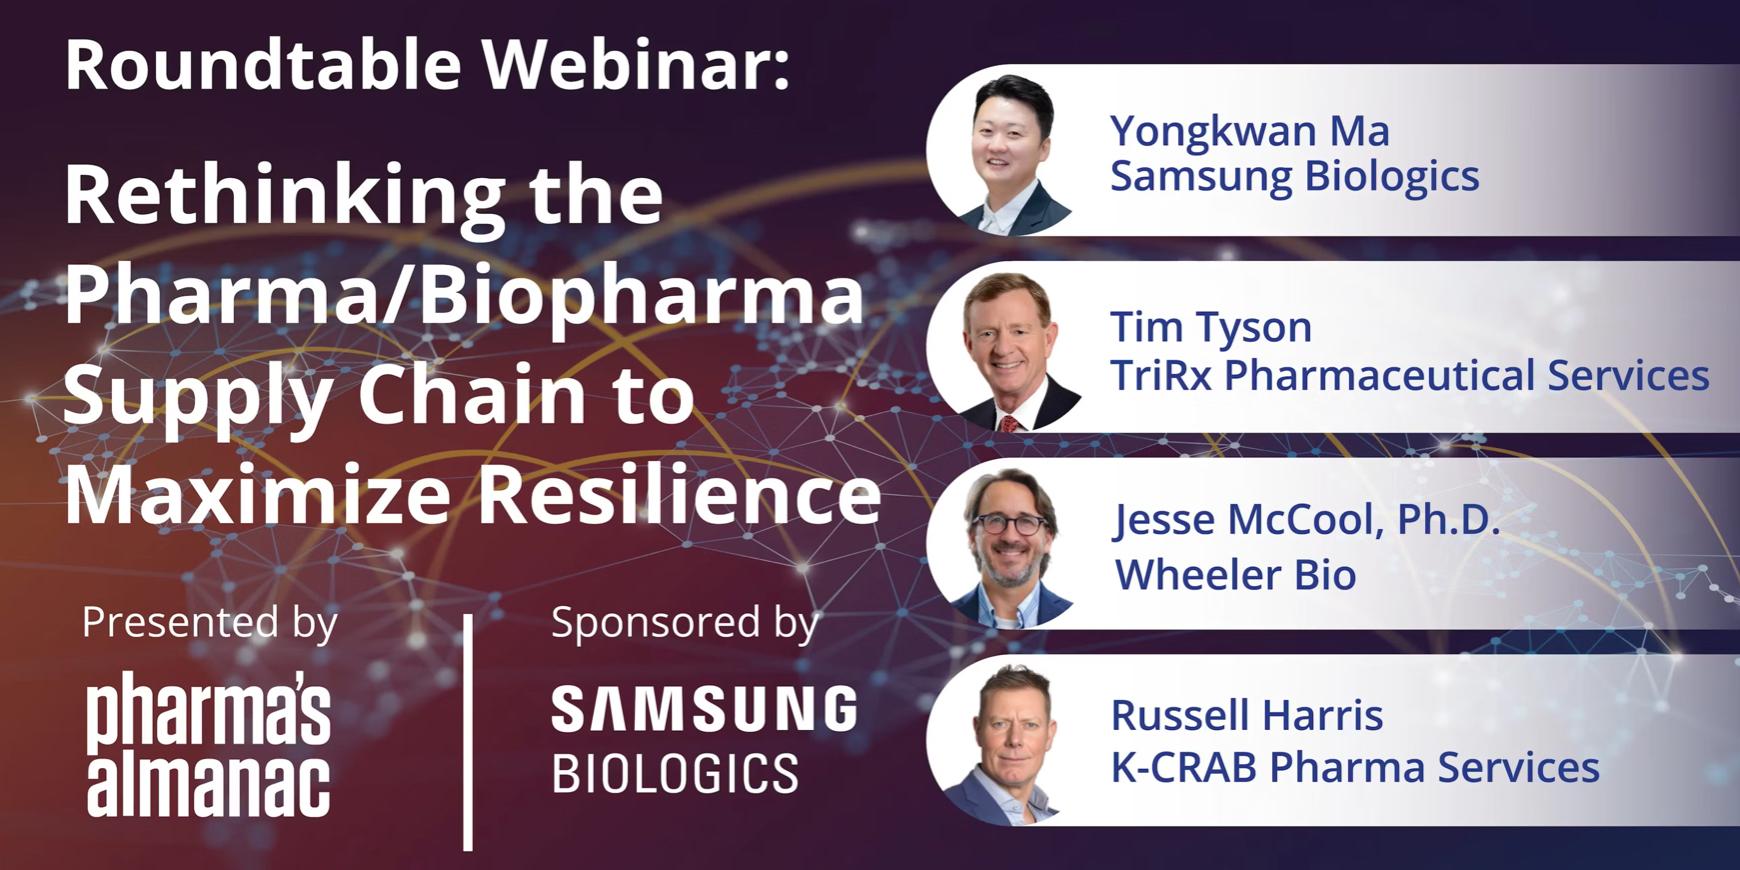 Rethinking the Pharma/Biopharma Supply Chain to Maximize Resilience